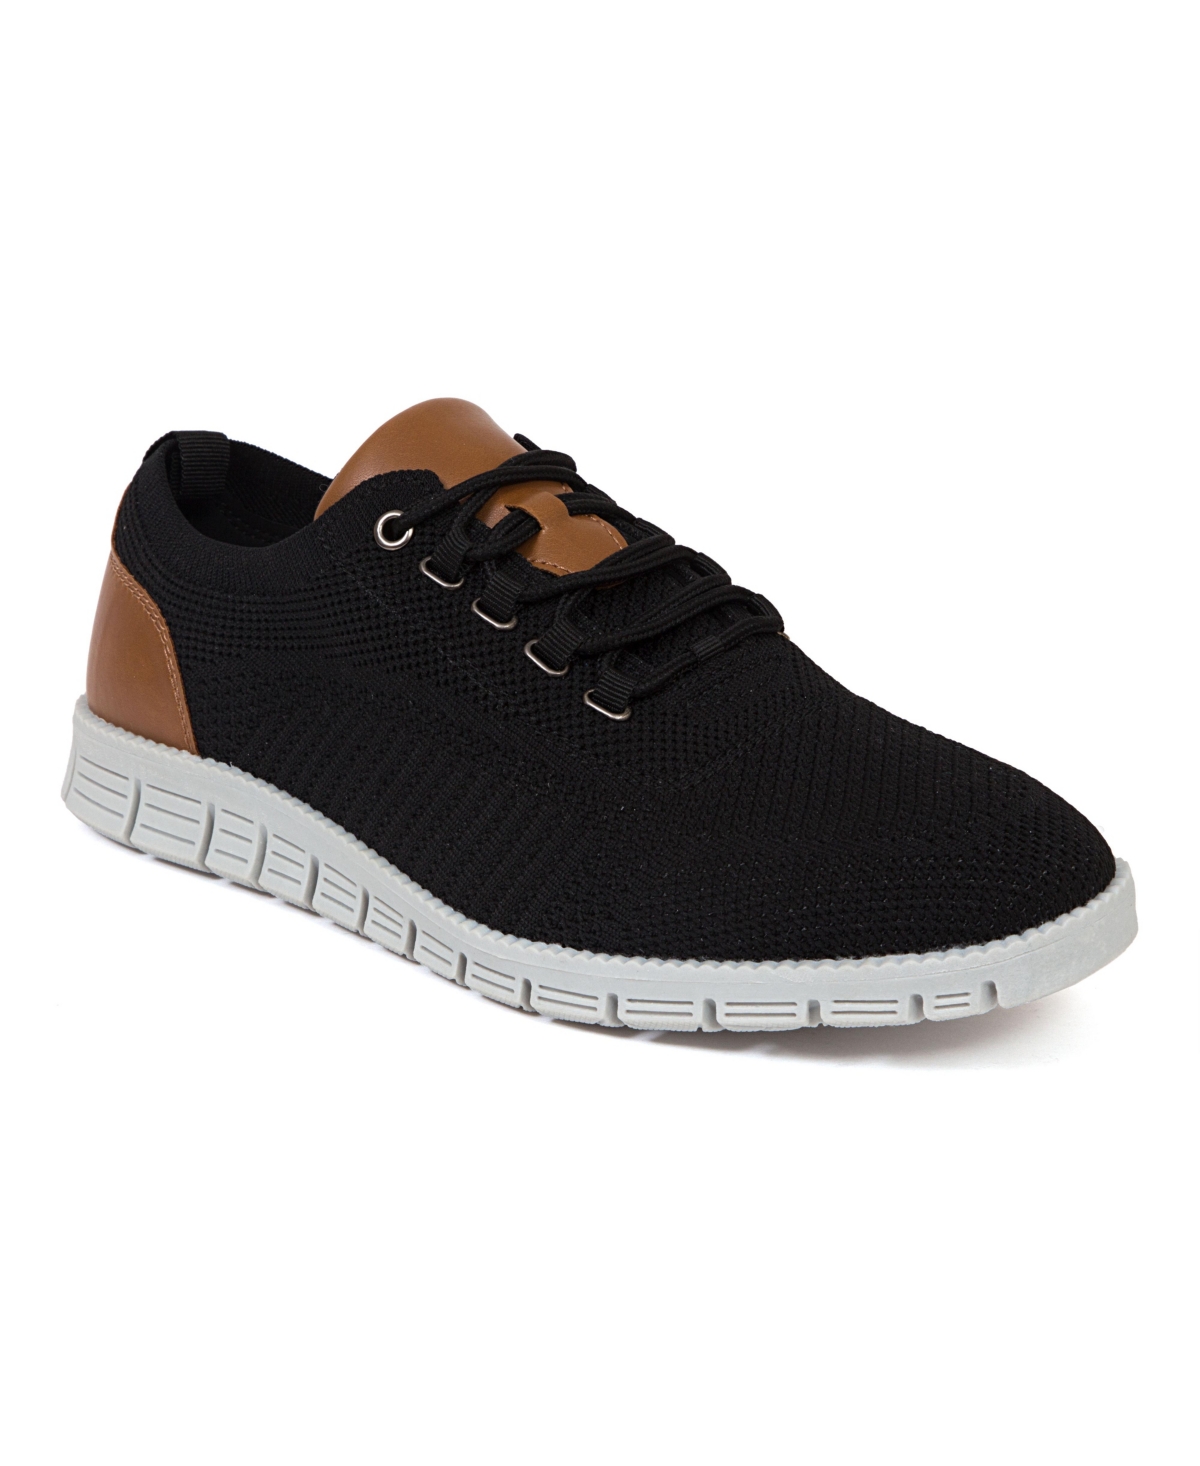 Men's Status Comfort Fashion Sneakers - Black, Brown